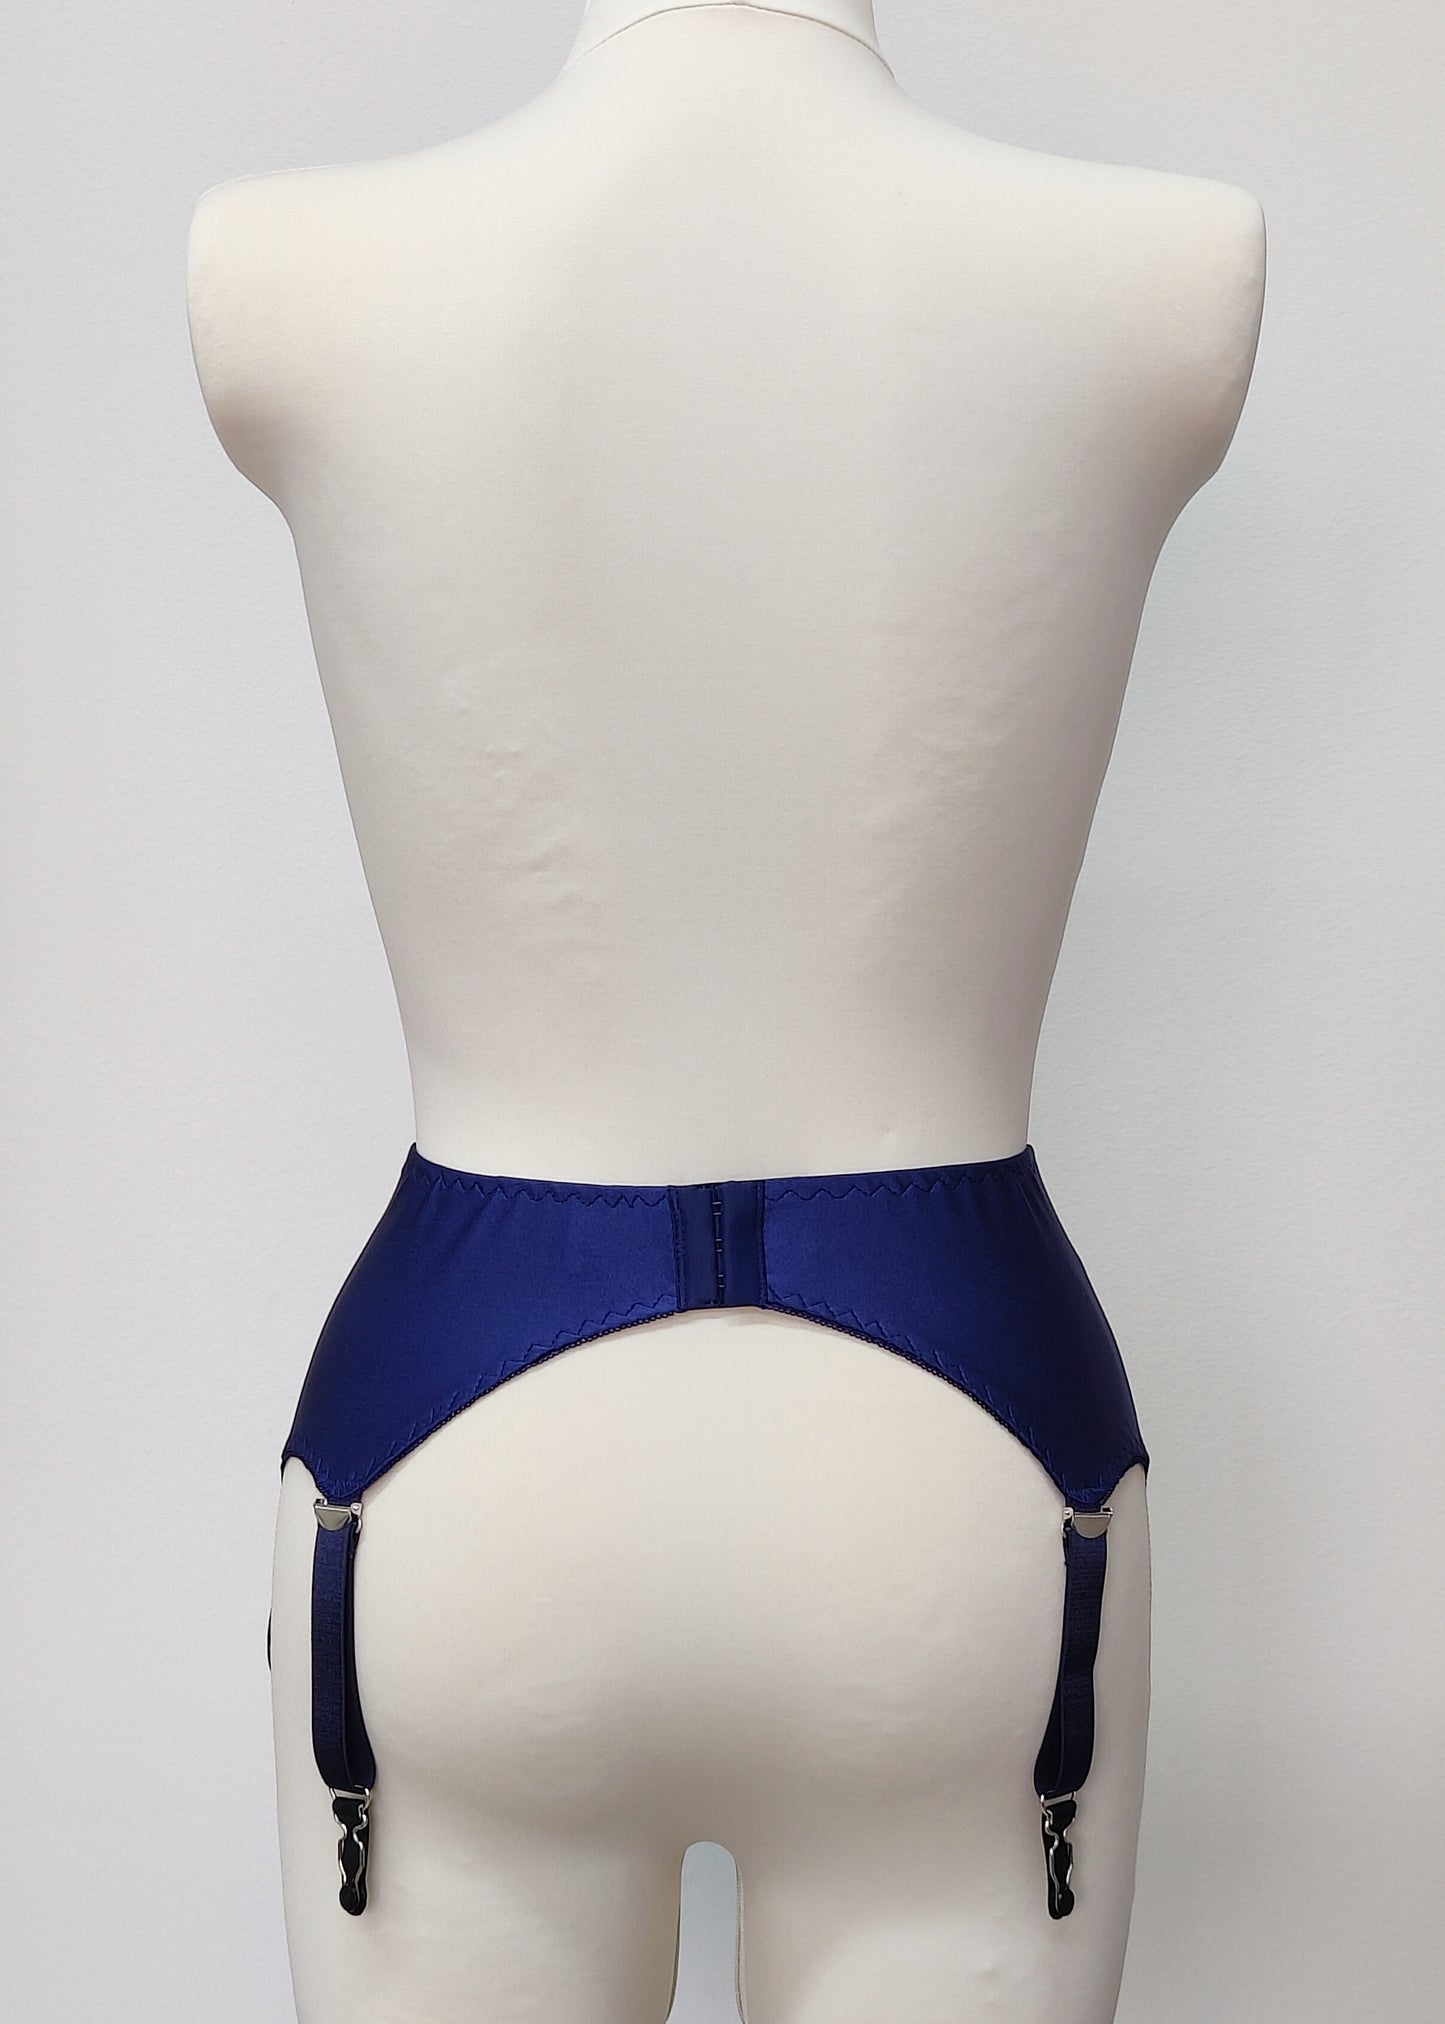 Blue NORA Deep V style Suspender belt Wide Retro Garter Belt Size XS-3XL